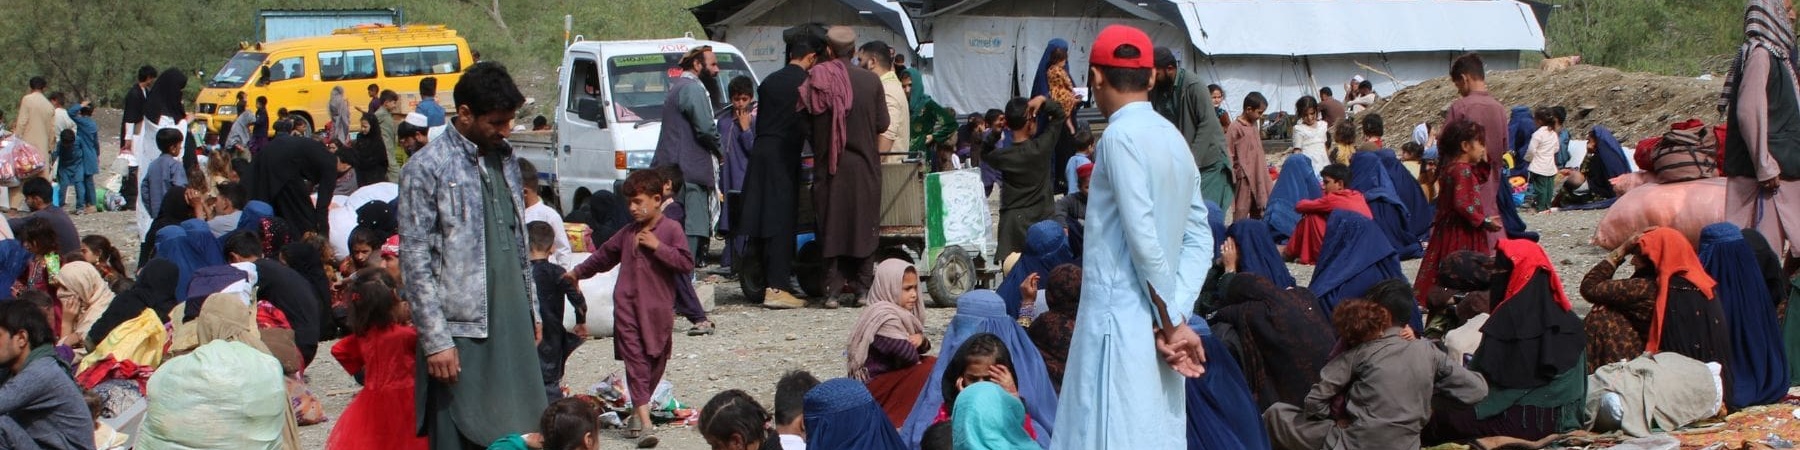 rifugiati afghani tra le tende del campo profughi in afghanistan 